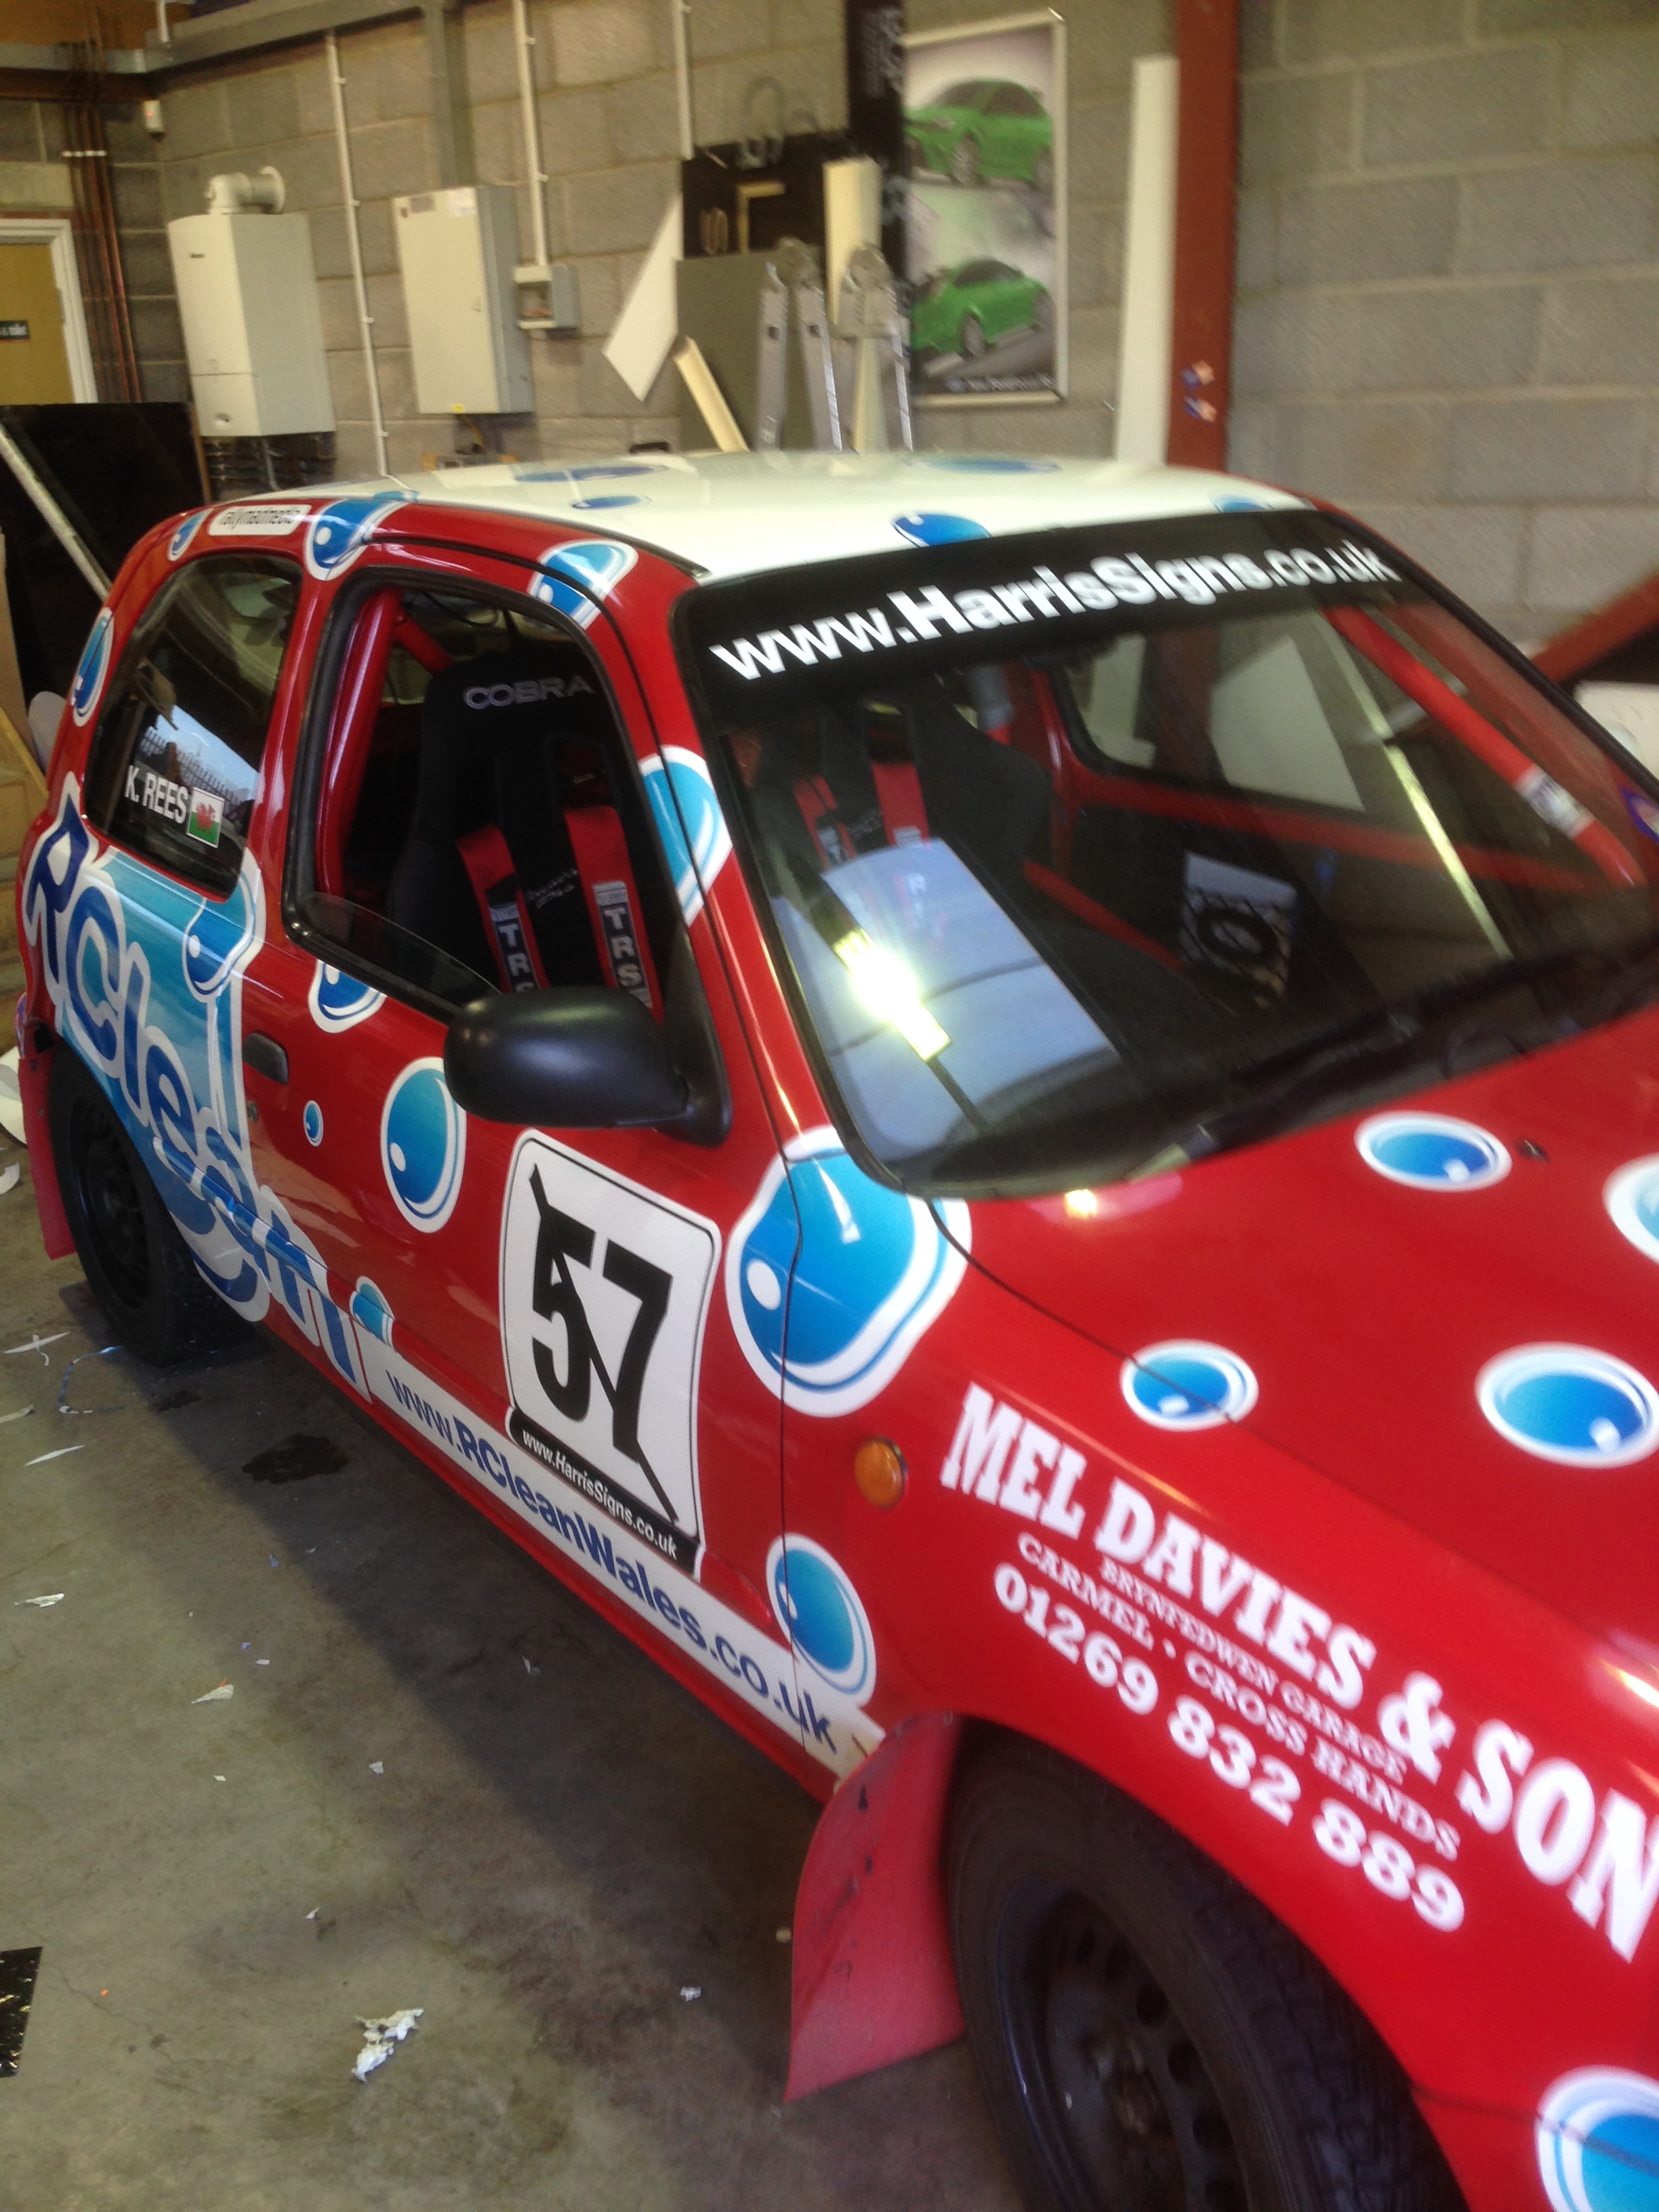 Rally Cars For SALE #(sold) Keegan Rees - RCleanWales Window Cleaners